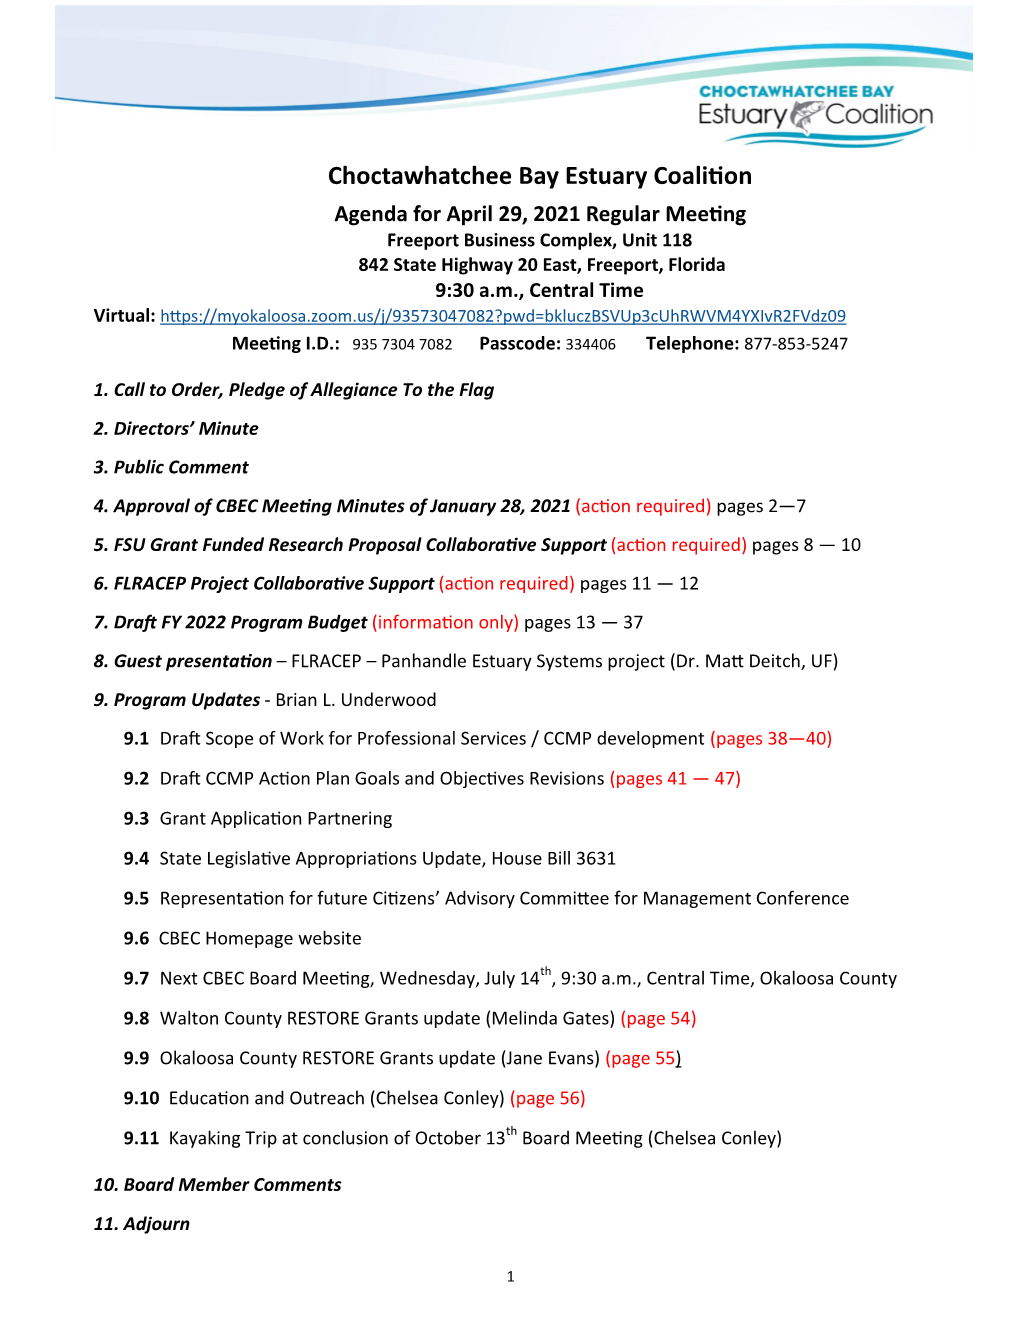 Choctawhatchee Bay Estuary Program Regular Meeting Agenda